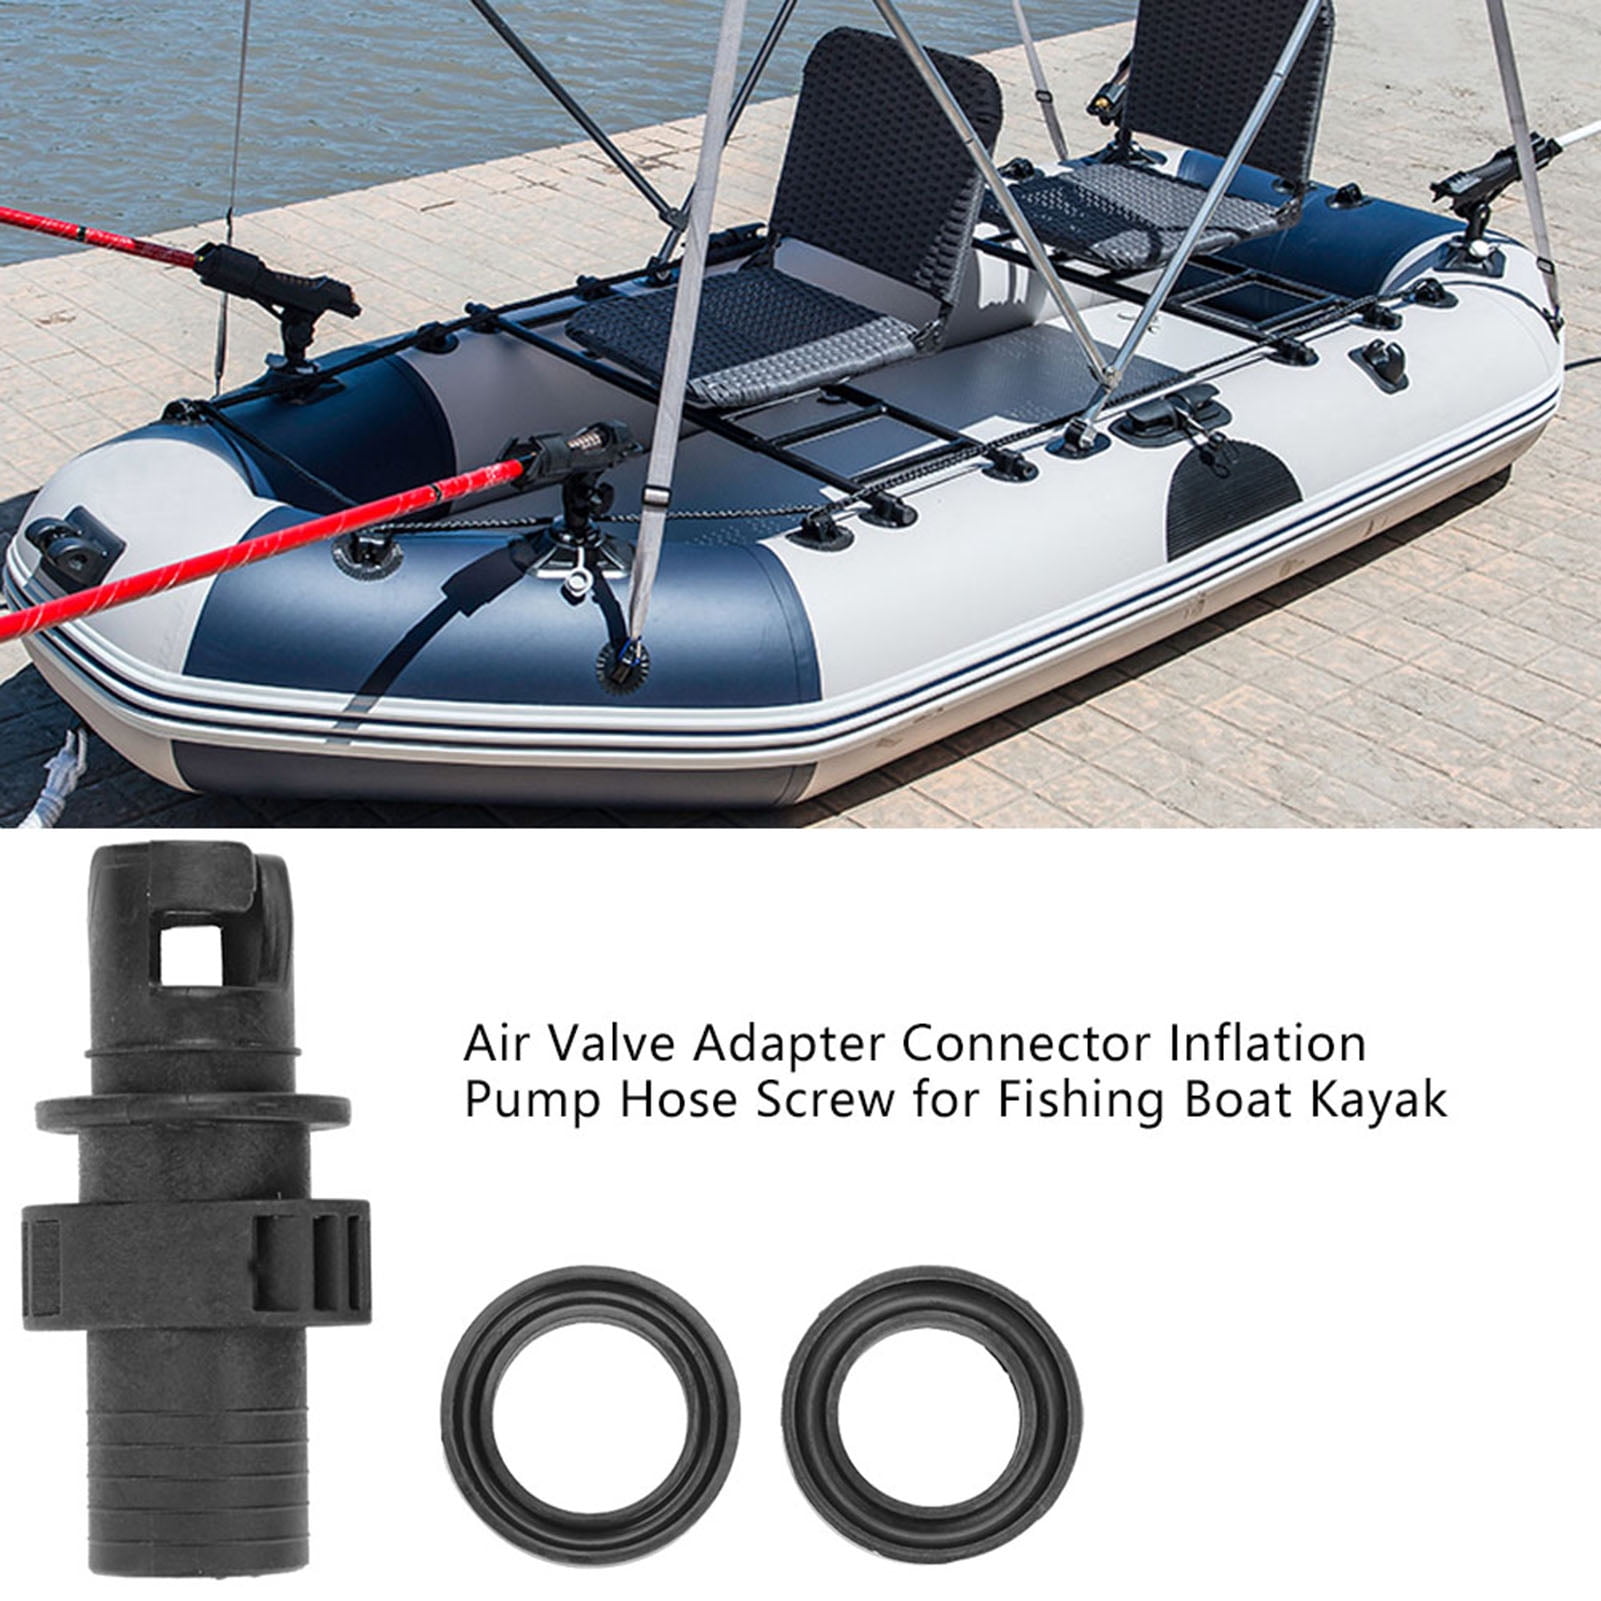 Inflatable Pvc Boat Kayak Air Valve Adapter Inflation Dinghy Pump Hose Screw 